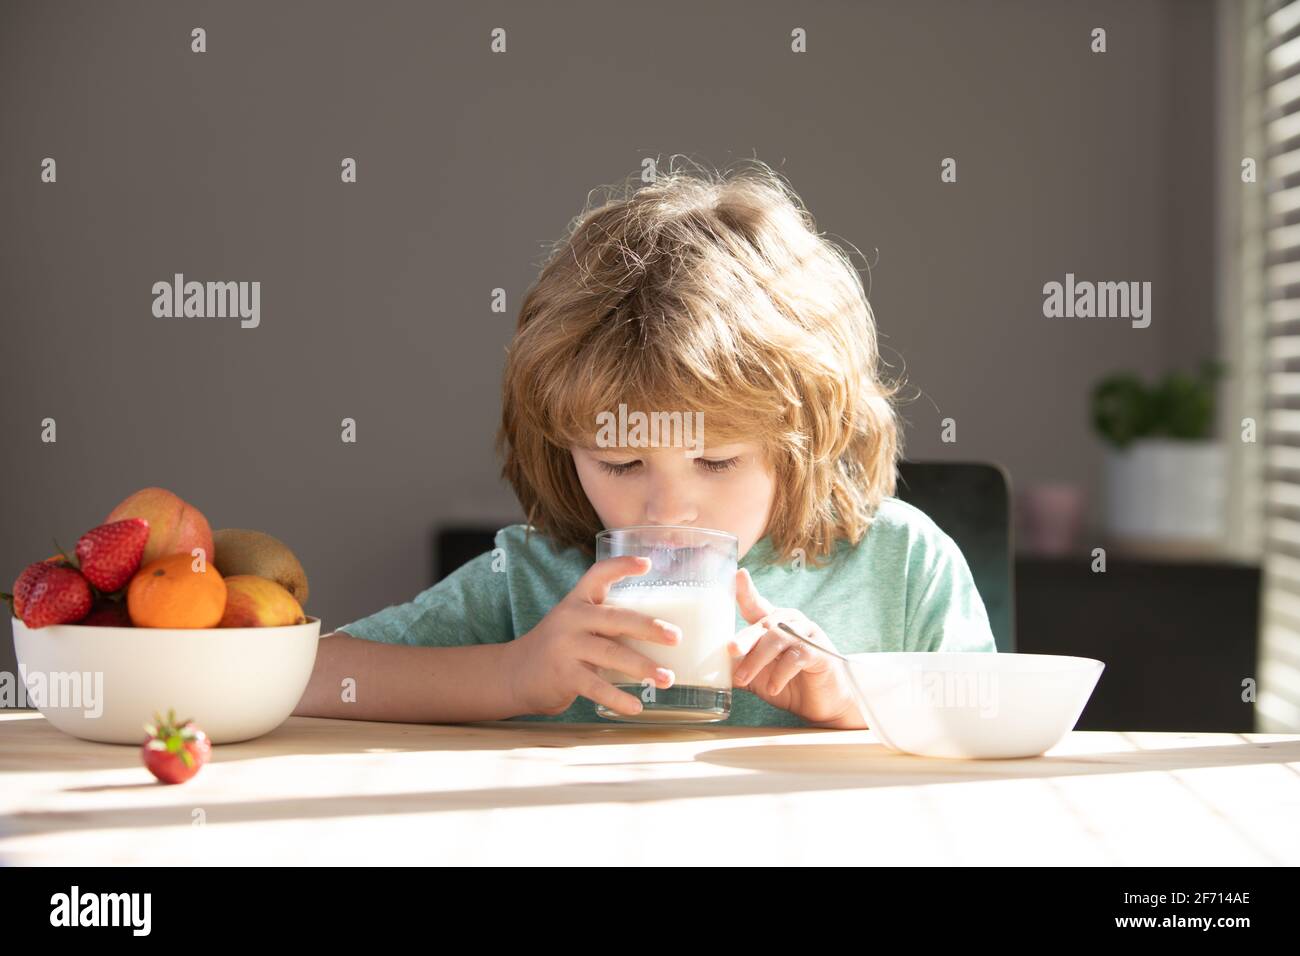 Kid drinking milk. Child eating healthy food. Stock Photo